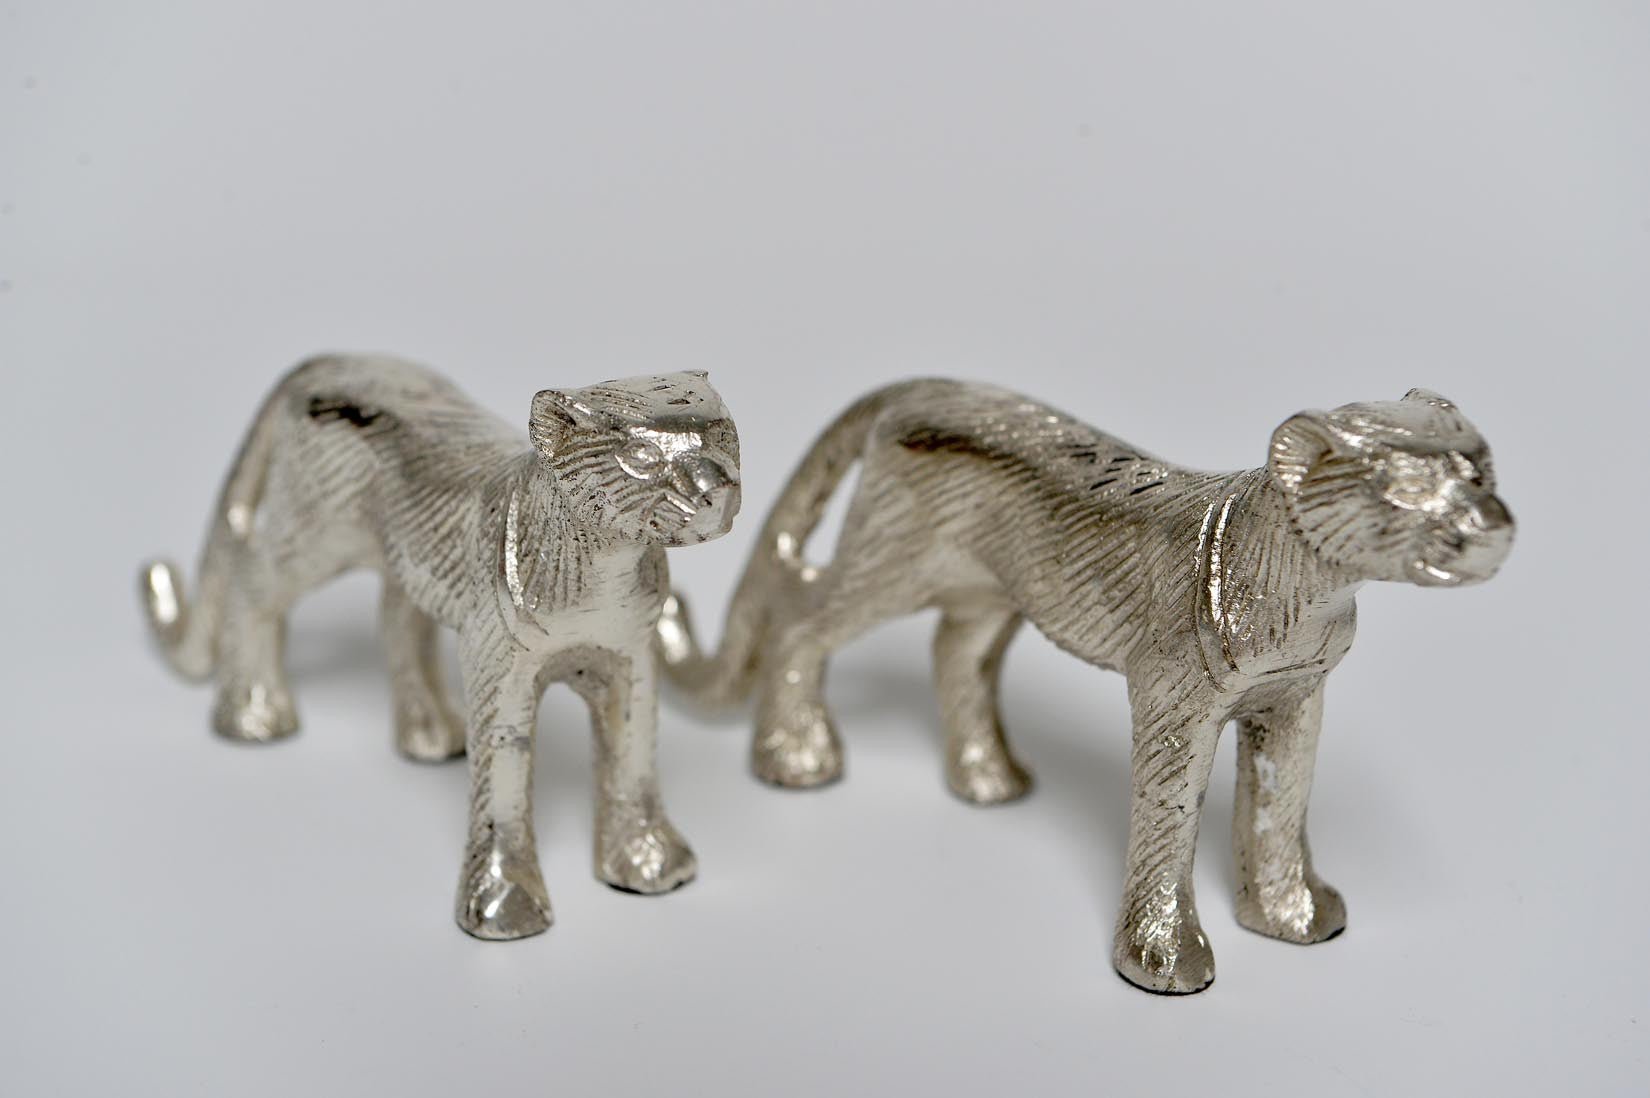 Aluminium silver decorative jaguar object - Natalia Willmott